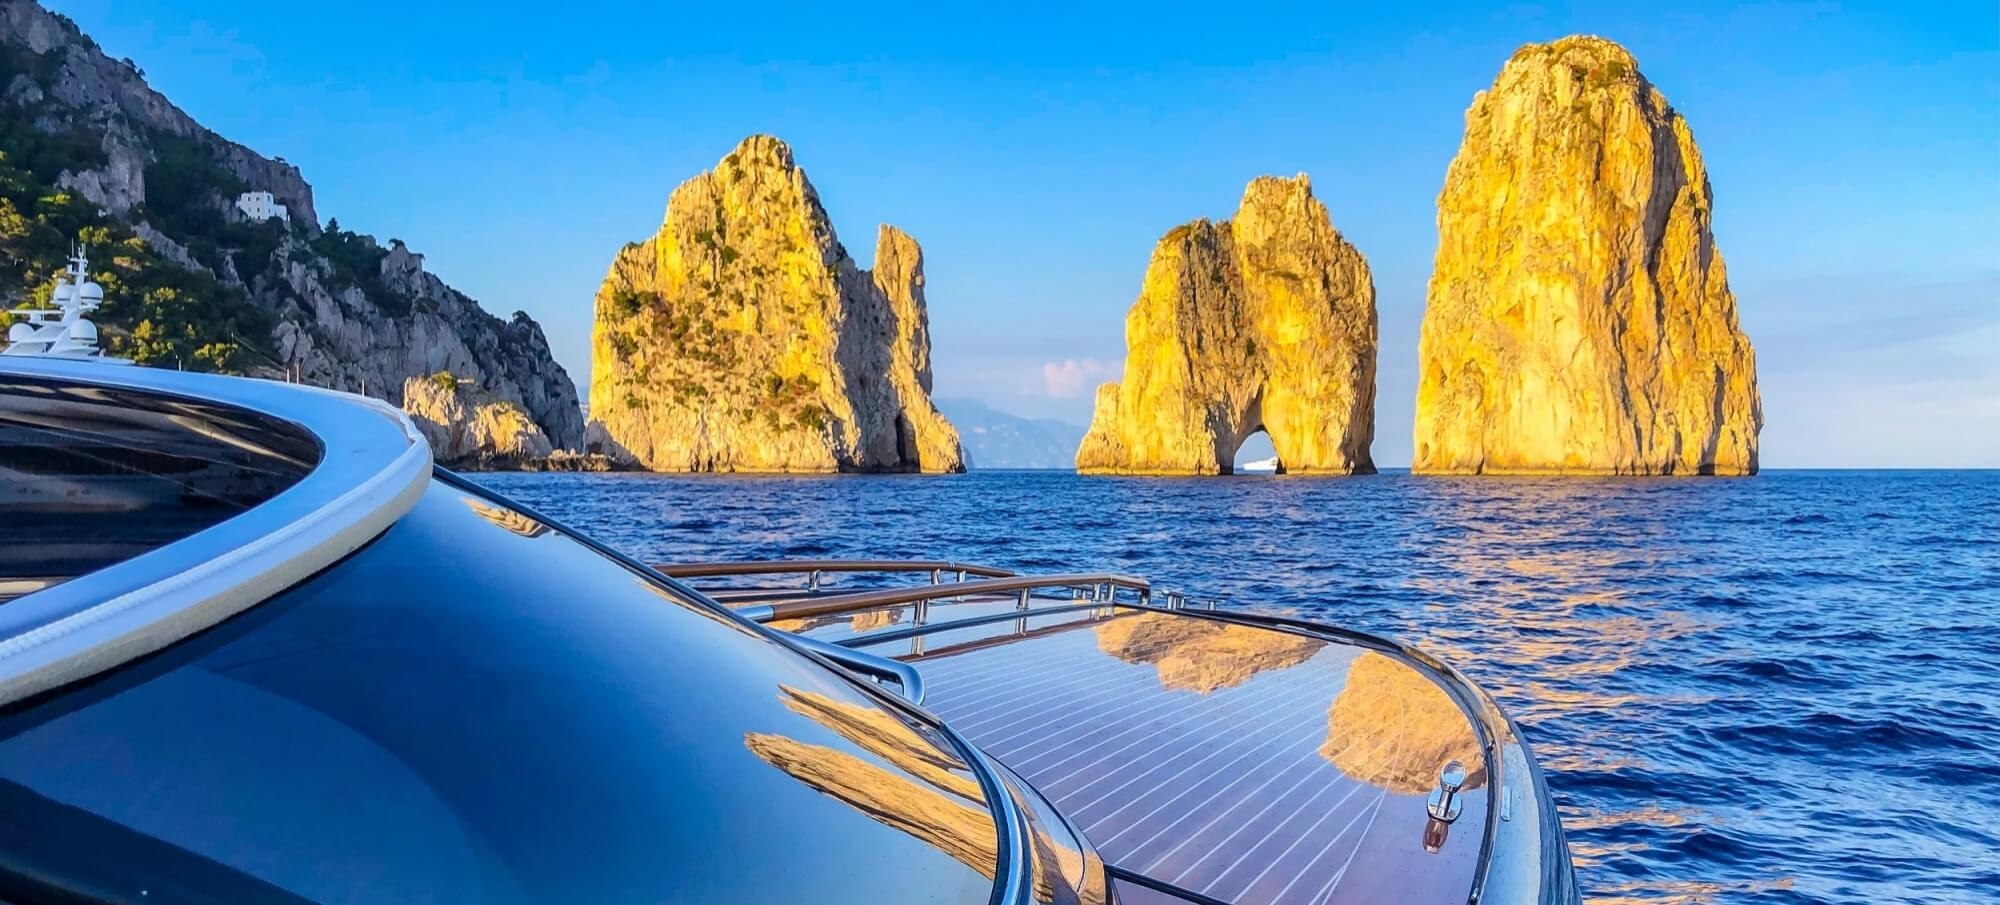 Boat tour around Capri: discover its myths